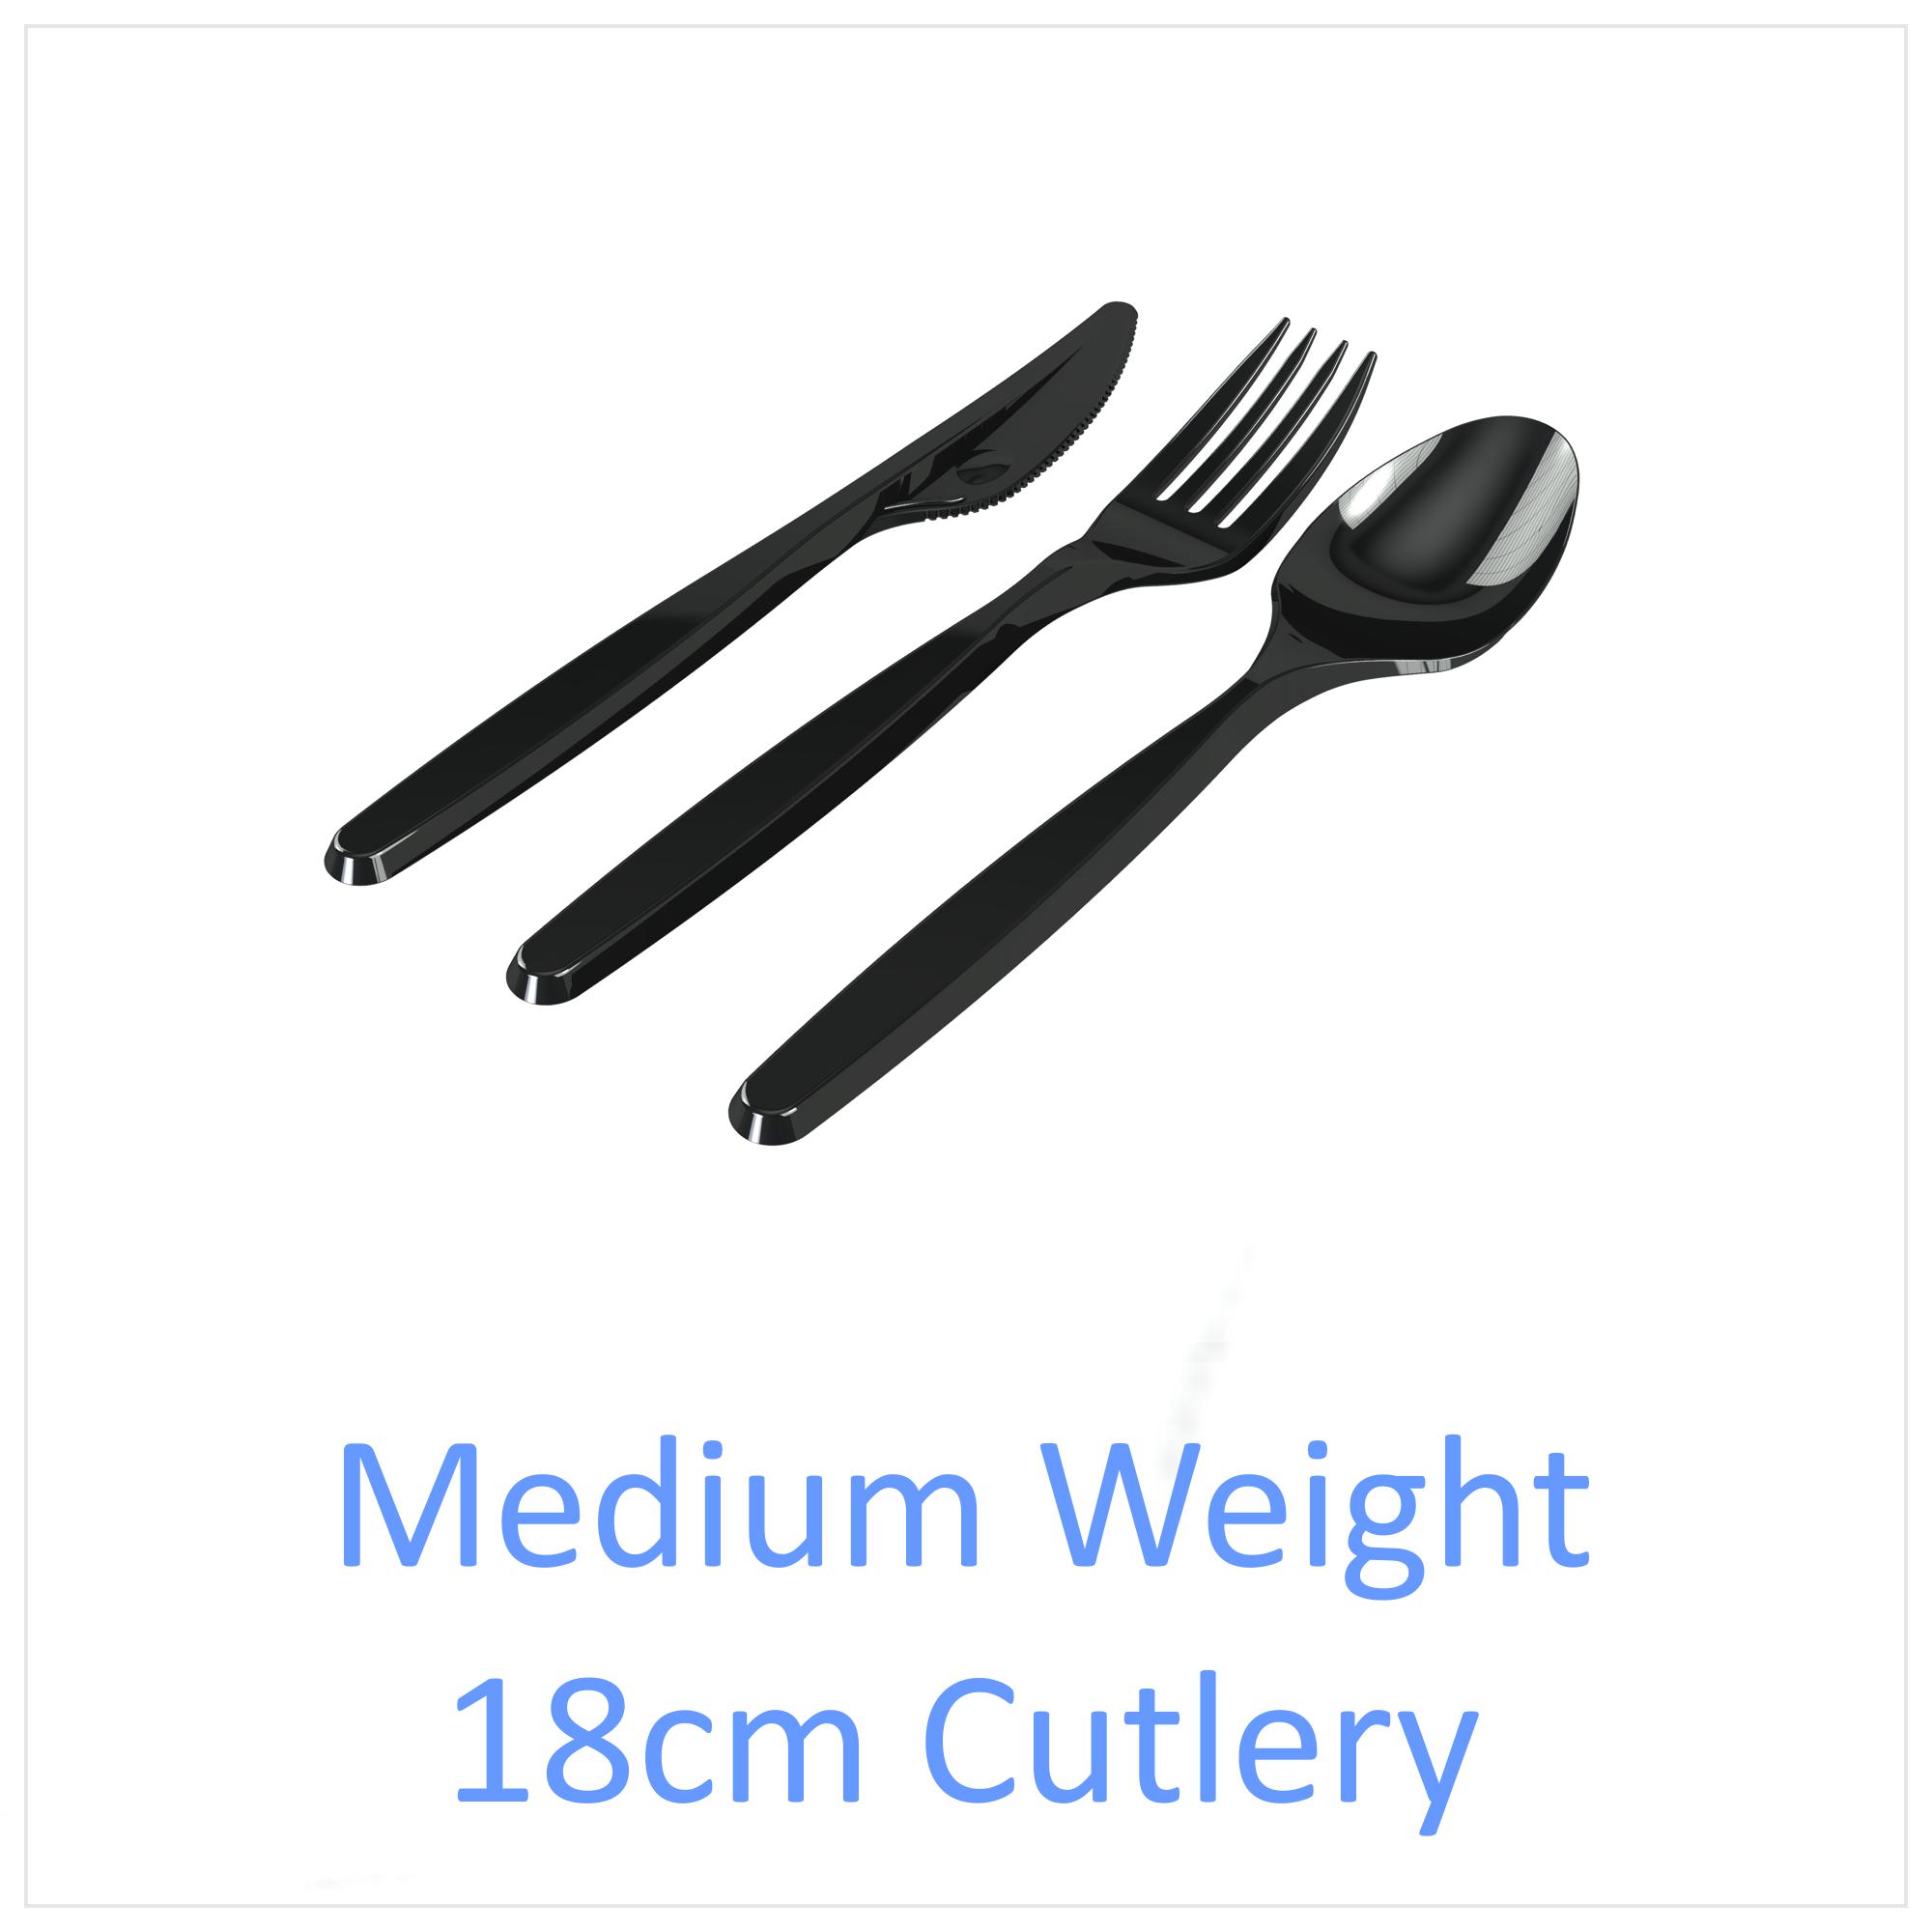 Medium Weight Cutlery